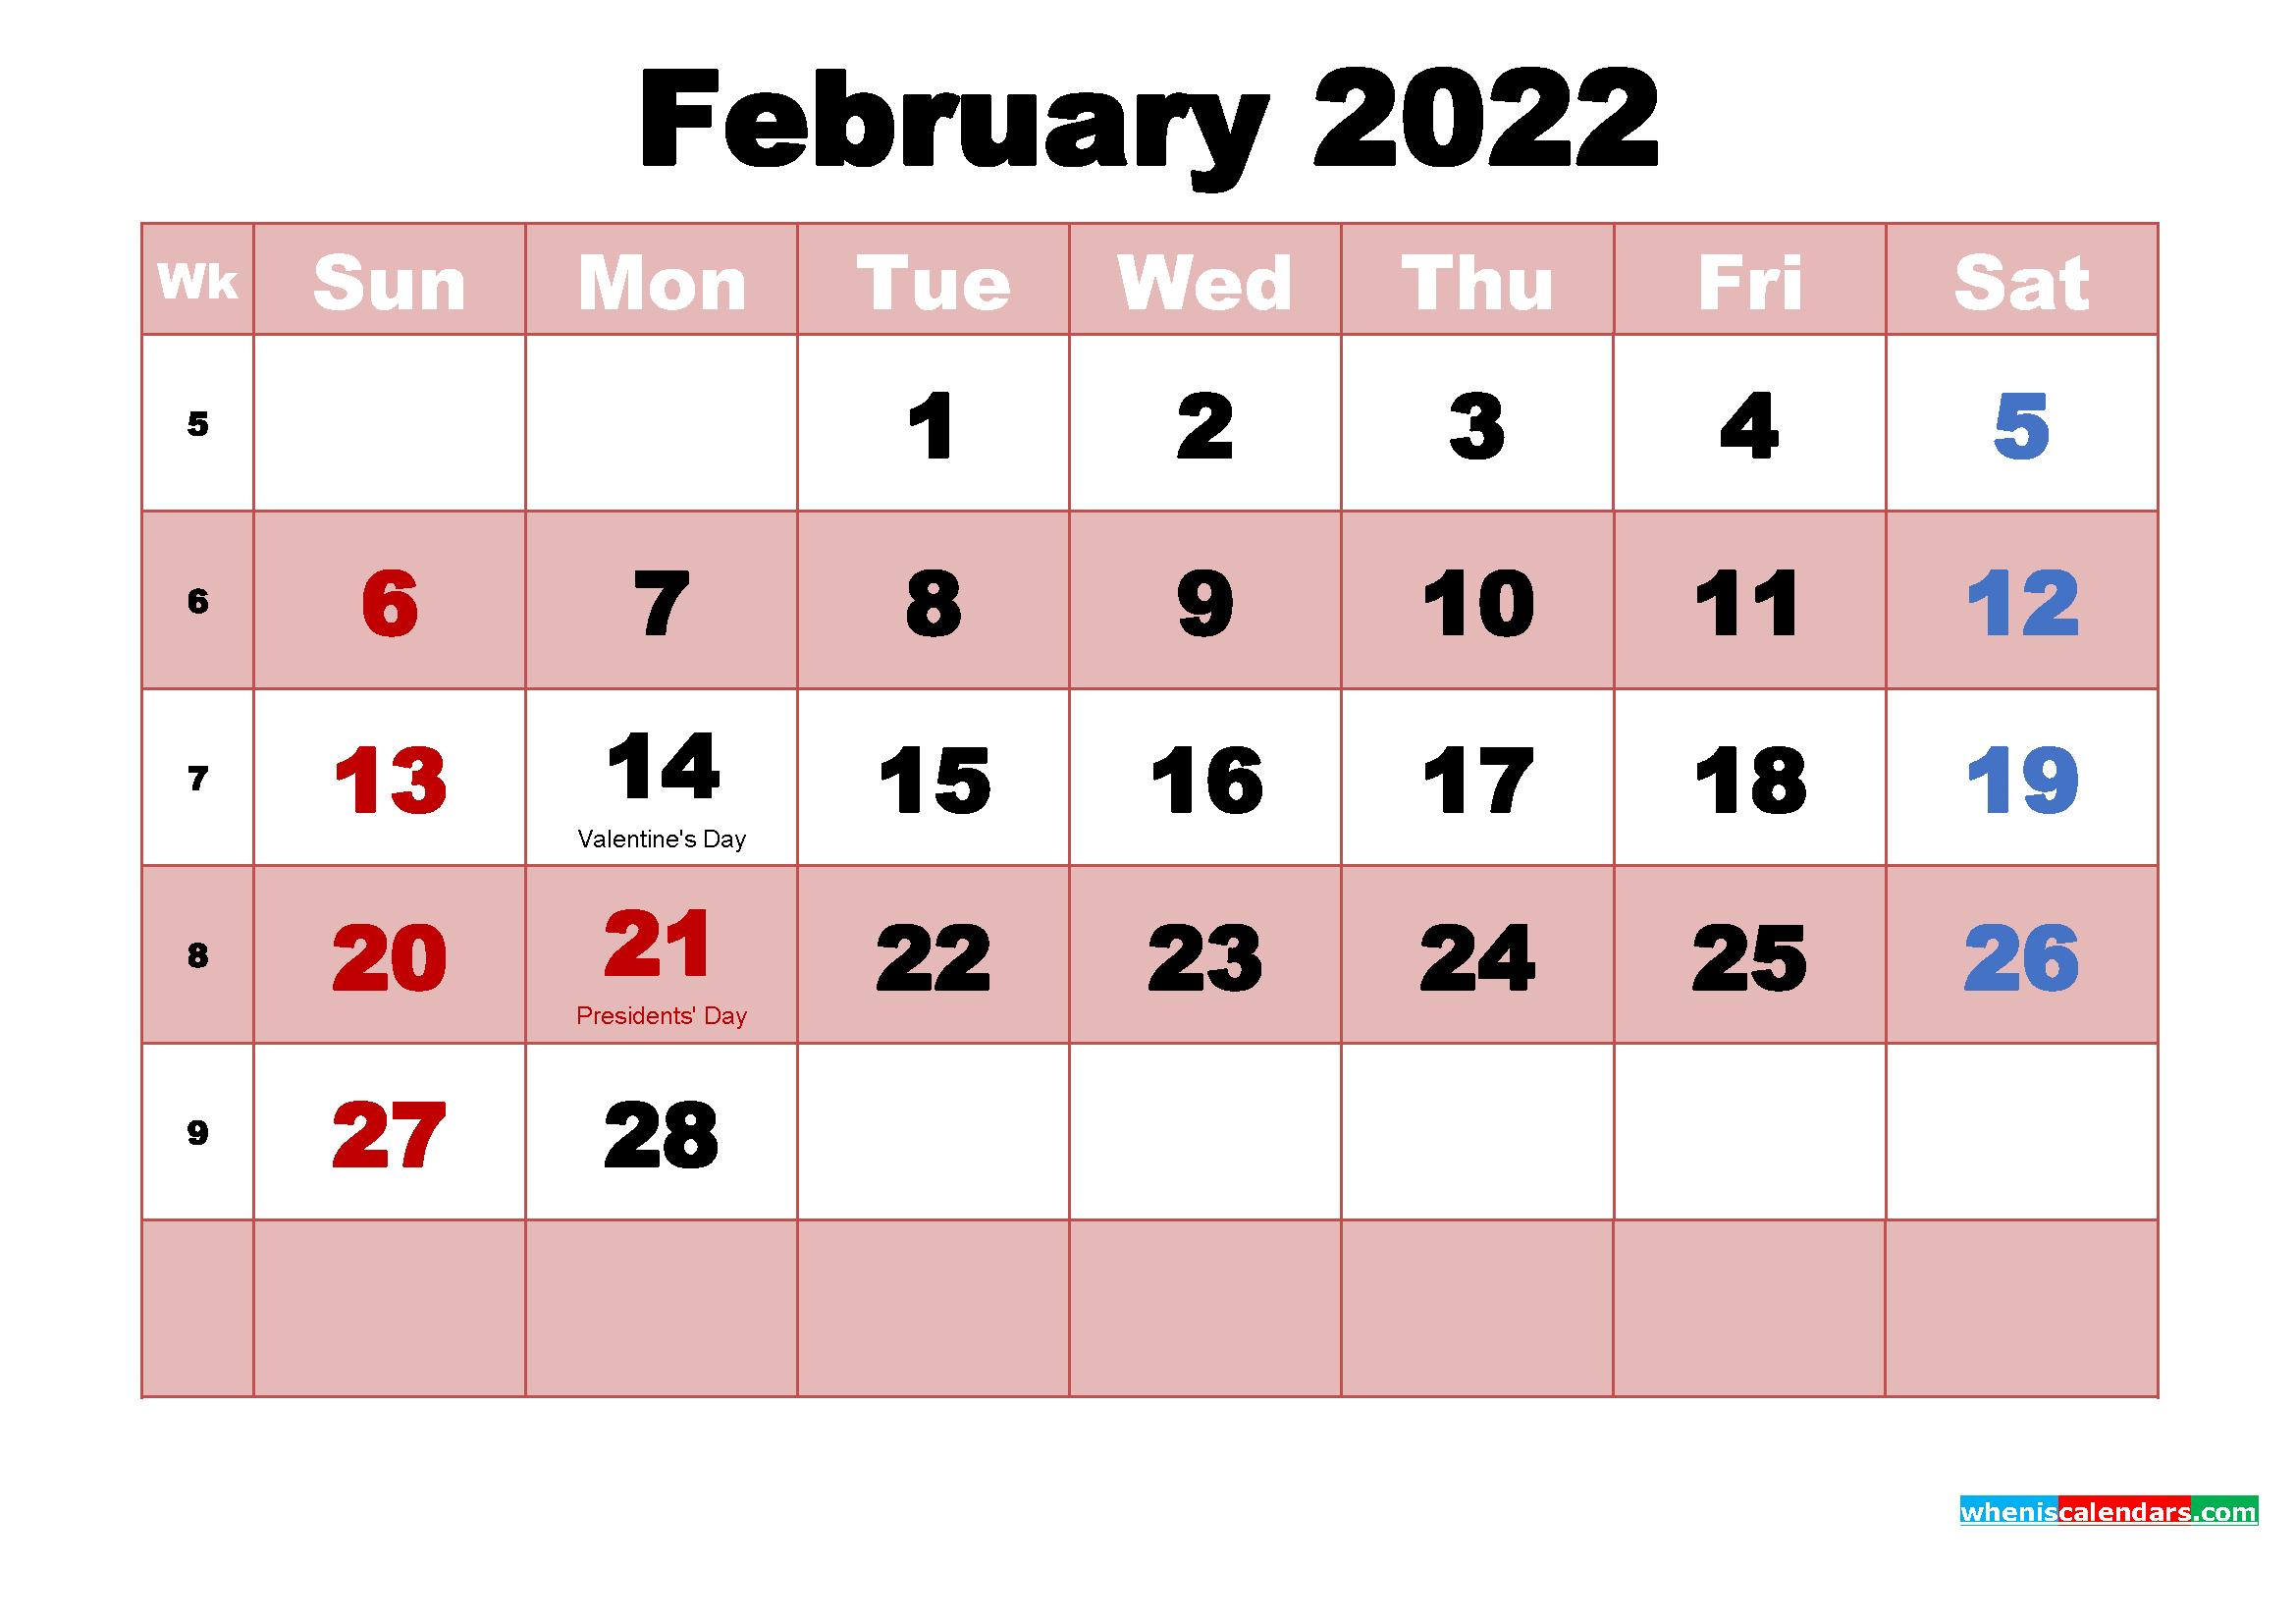 February 2022 Calendar With Holidays Wallpaper